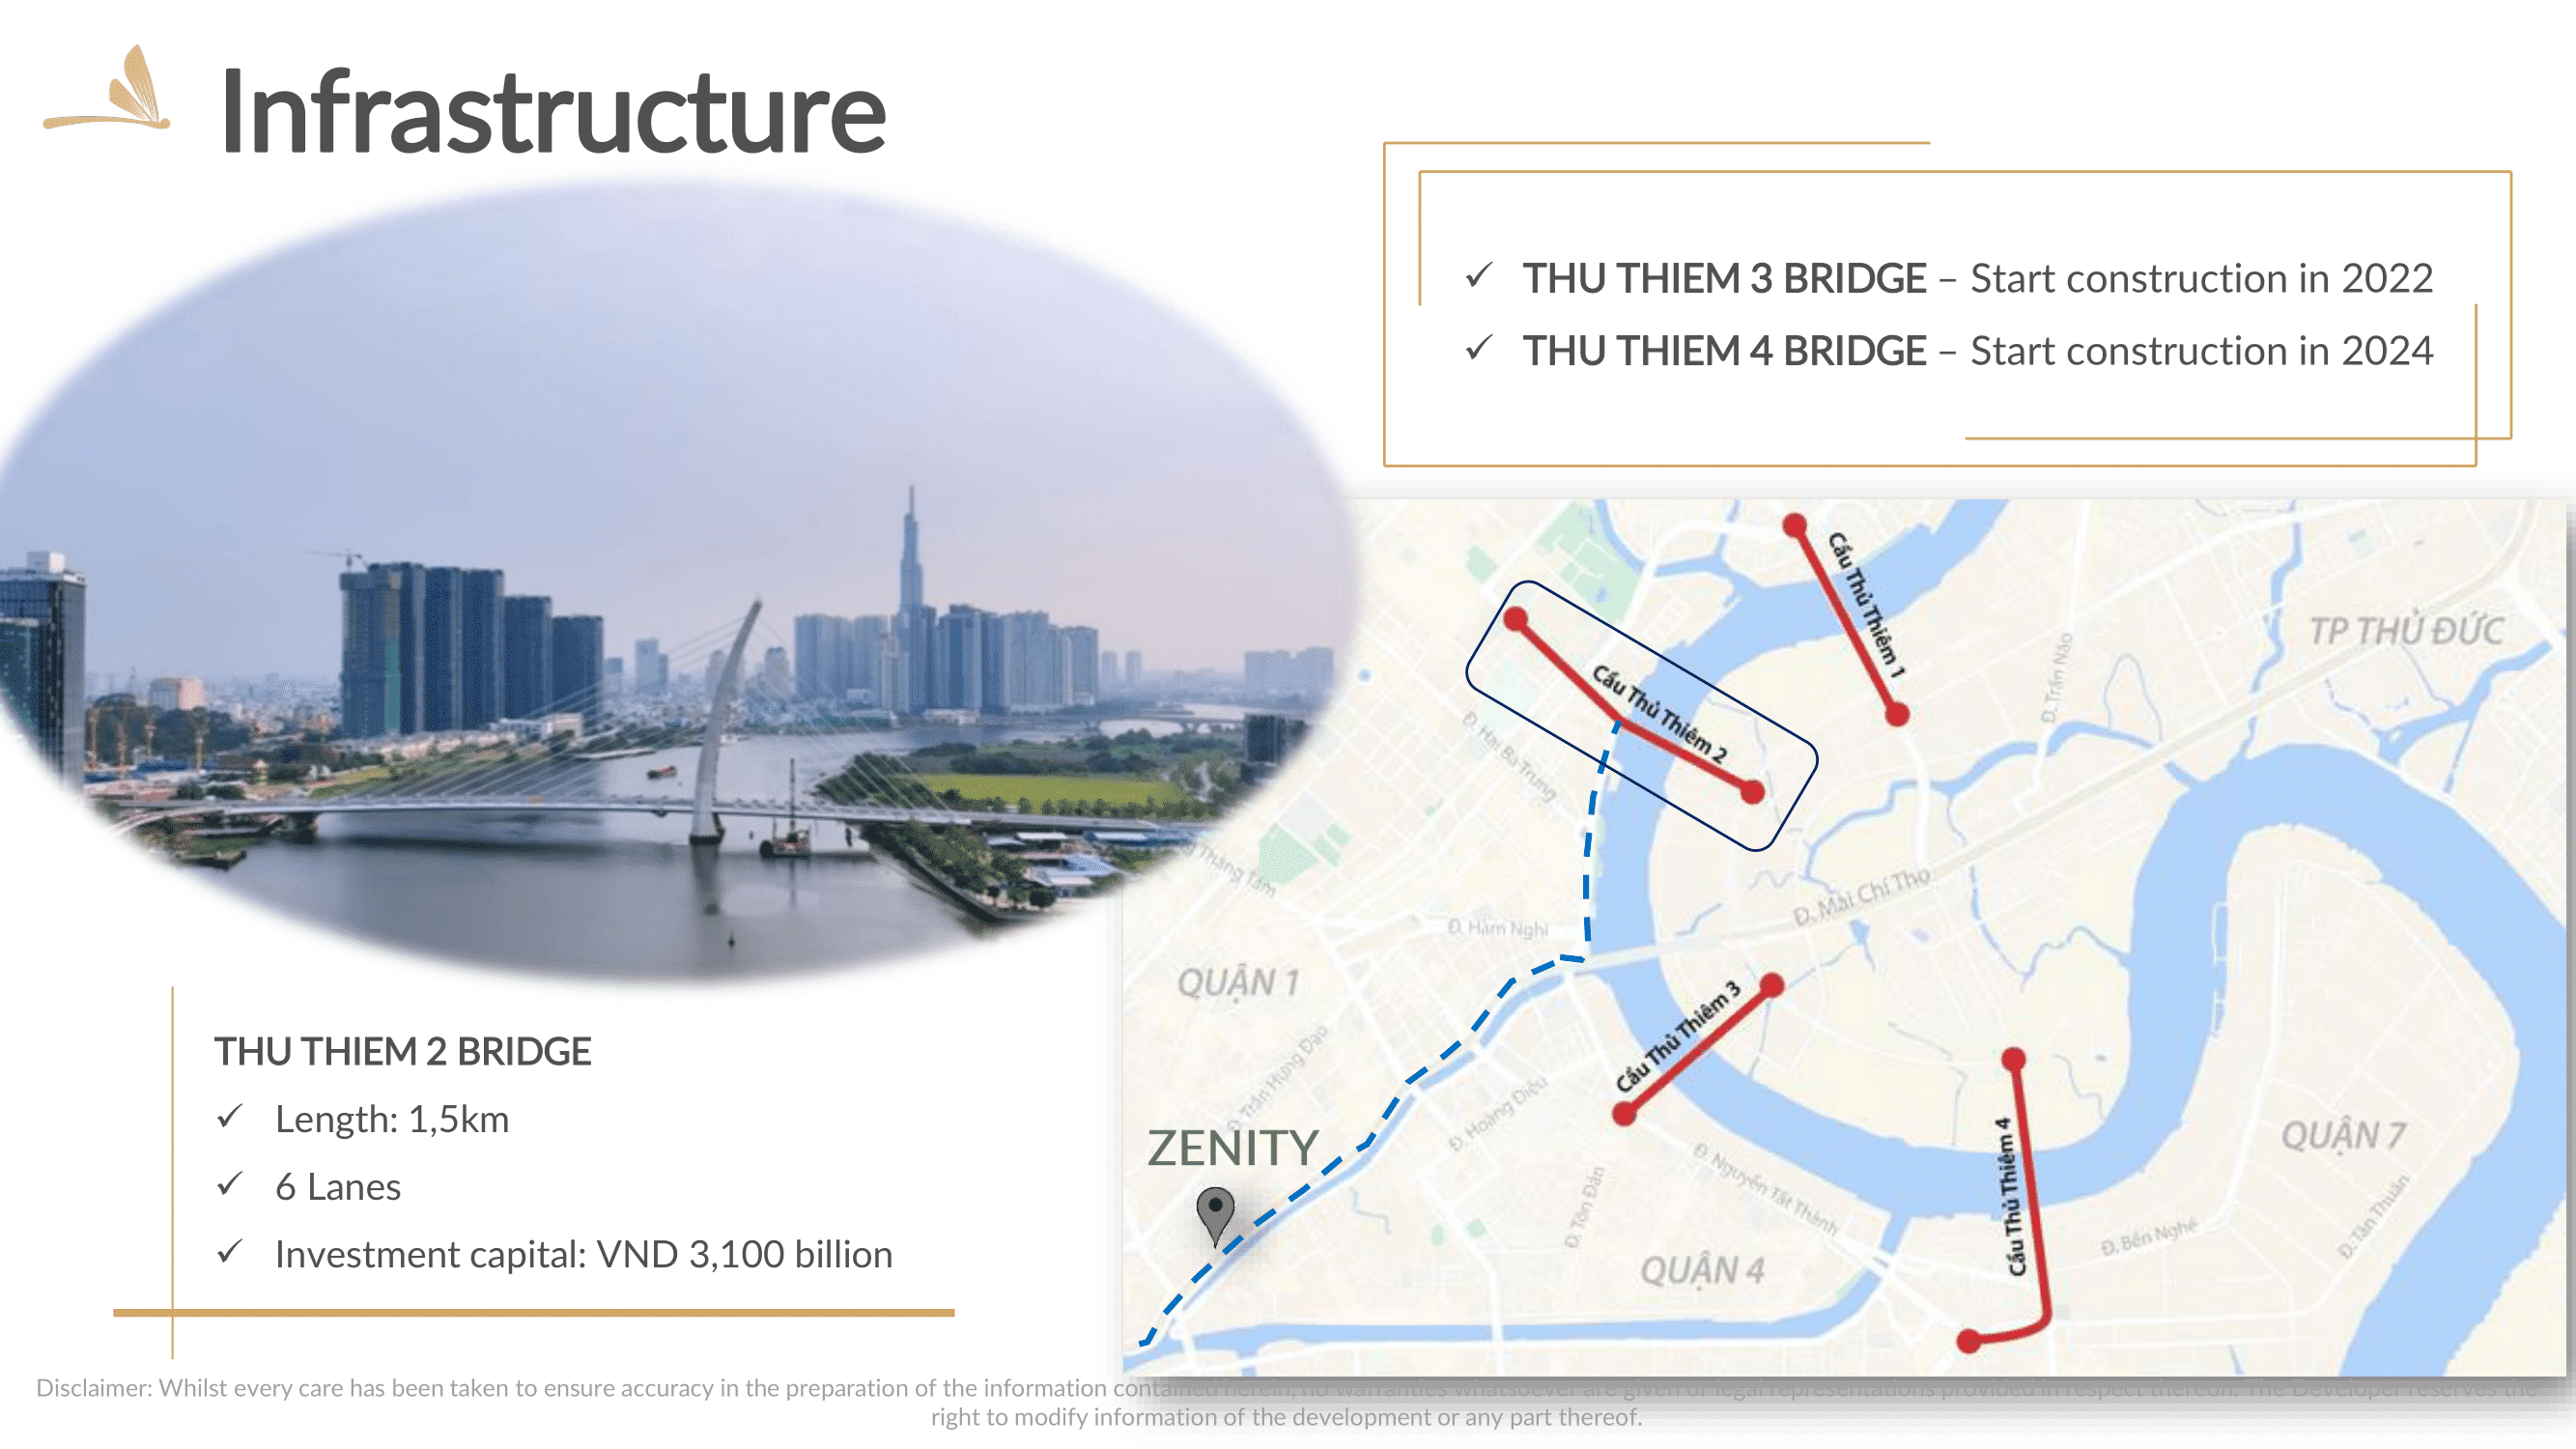 Infrastructure Upgrades: Bridges